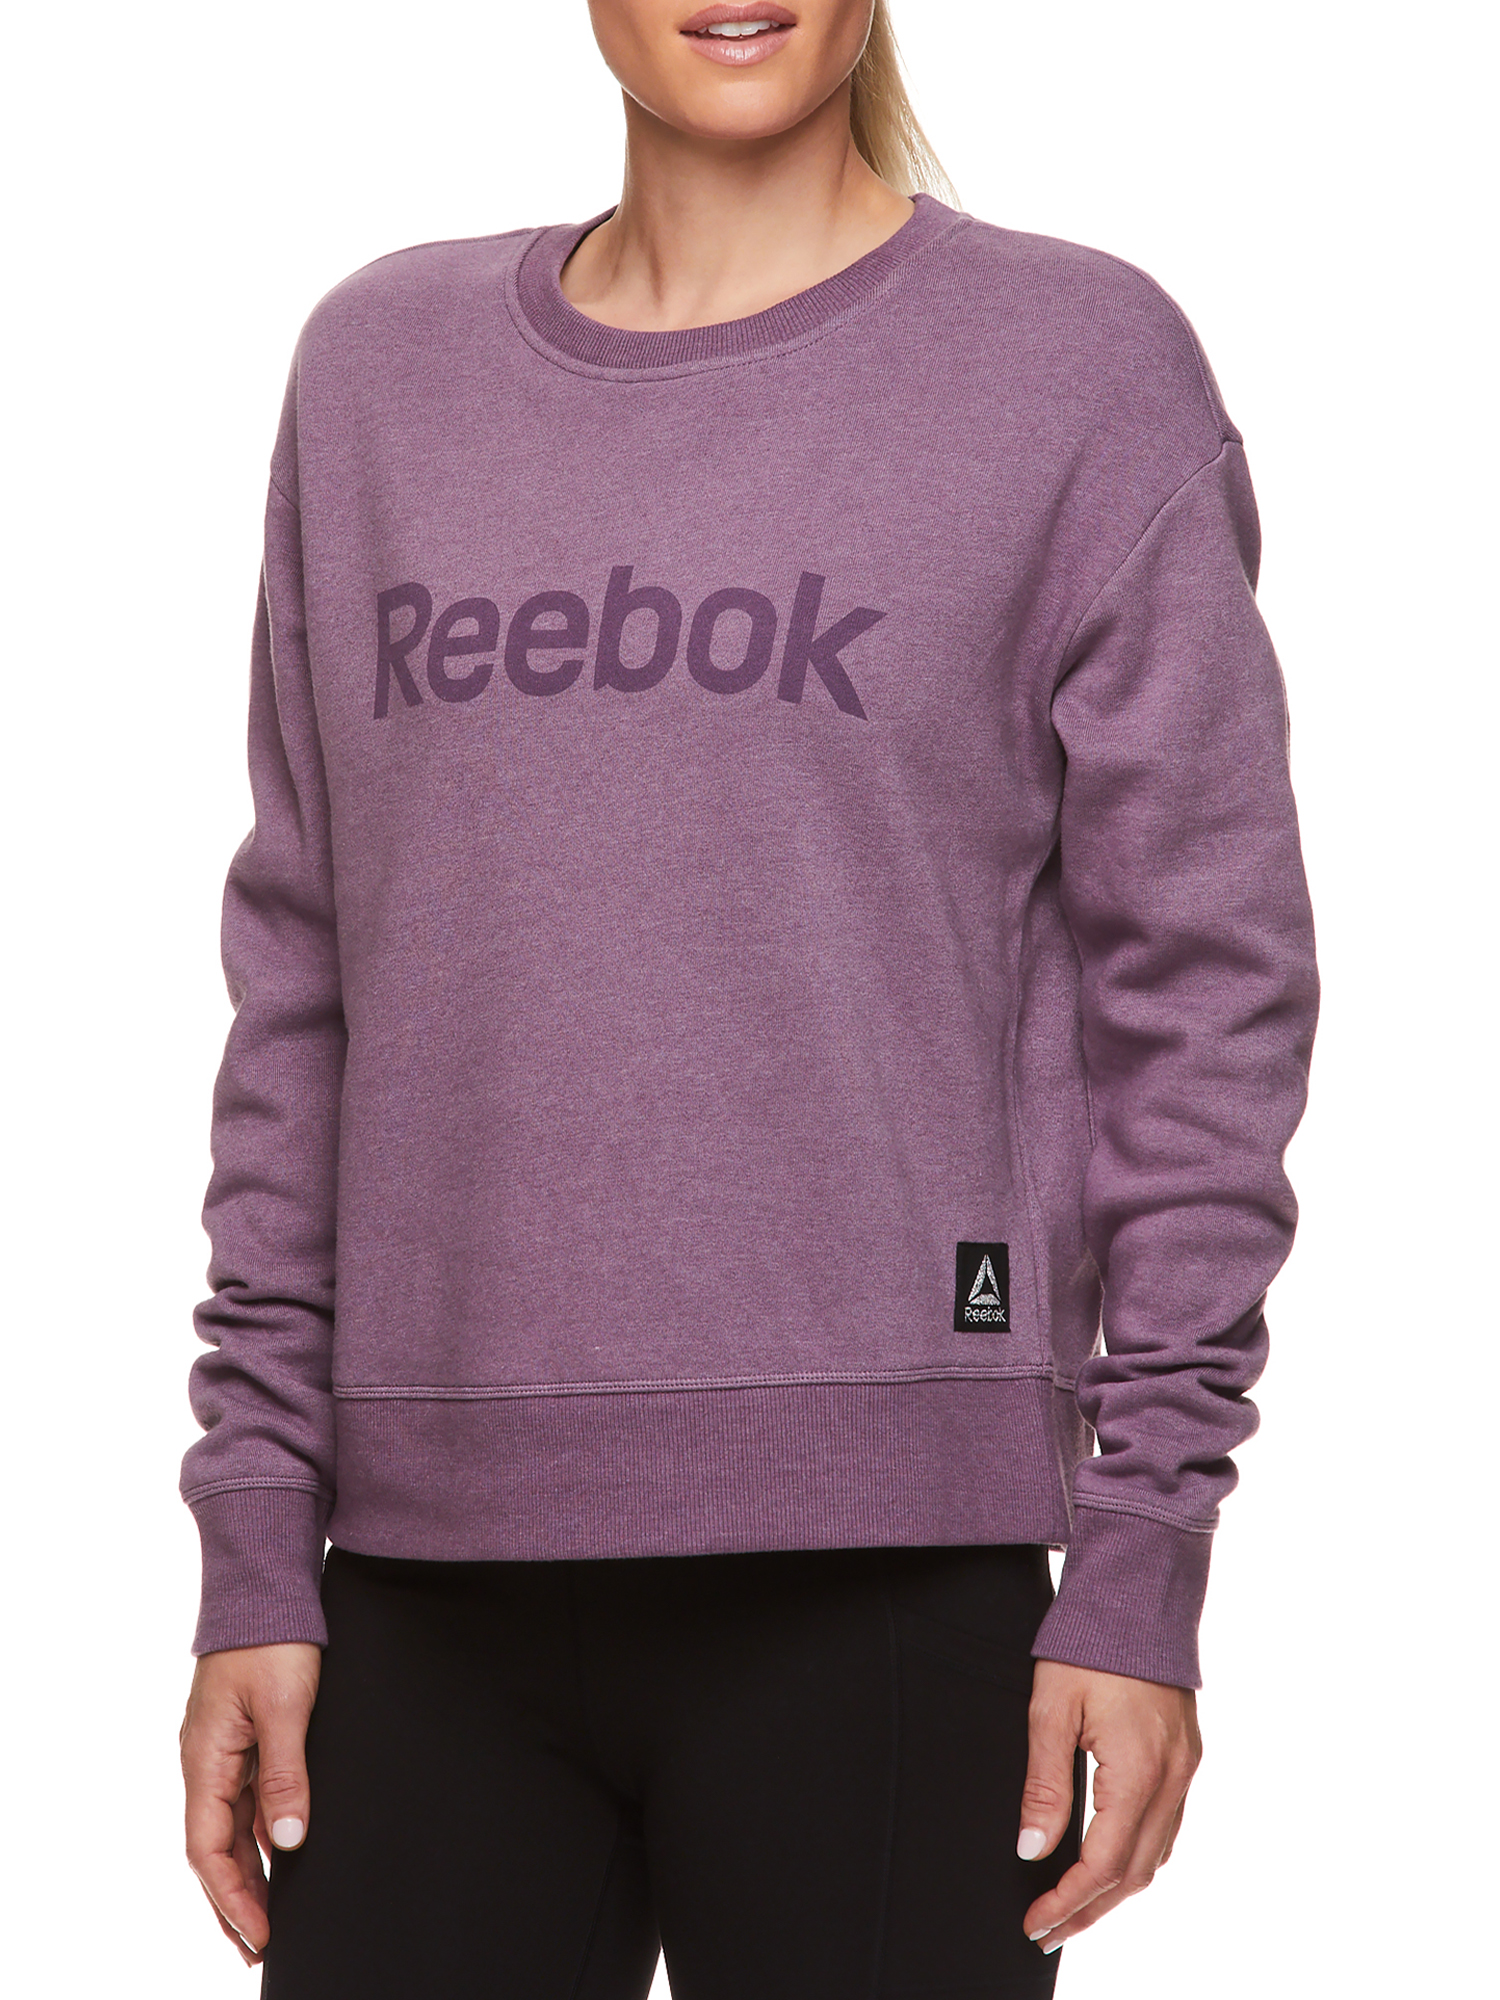 Reebok Womens Cozy Crewneck Sweatshirt with Graphic - image 2 of 4